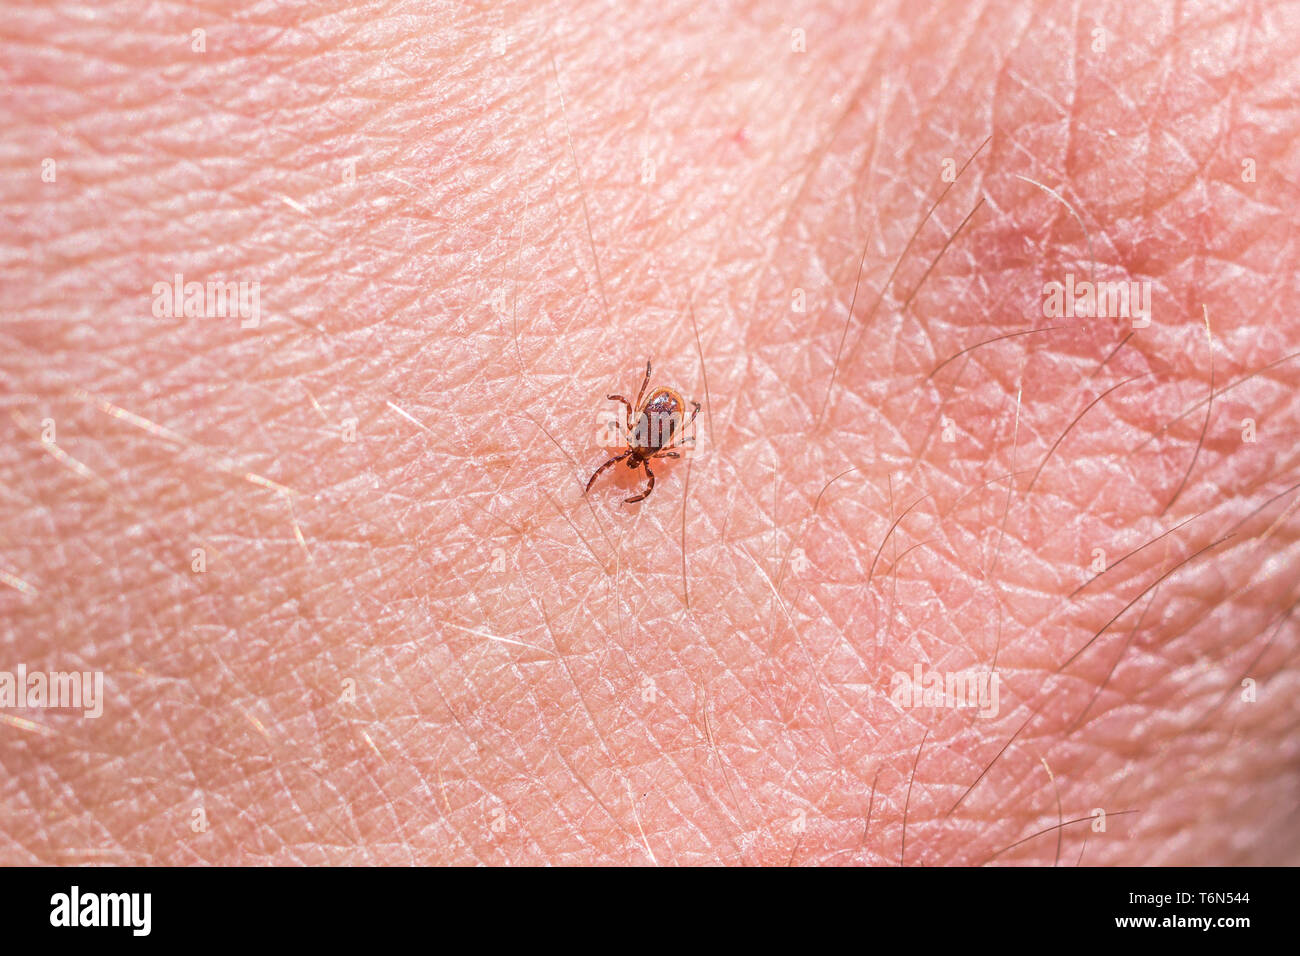 A deer tick or black-legged tick (Ixodes scapularis) crawling on skin. Stock Photo